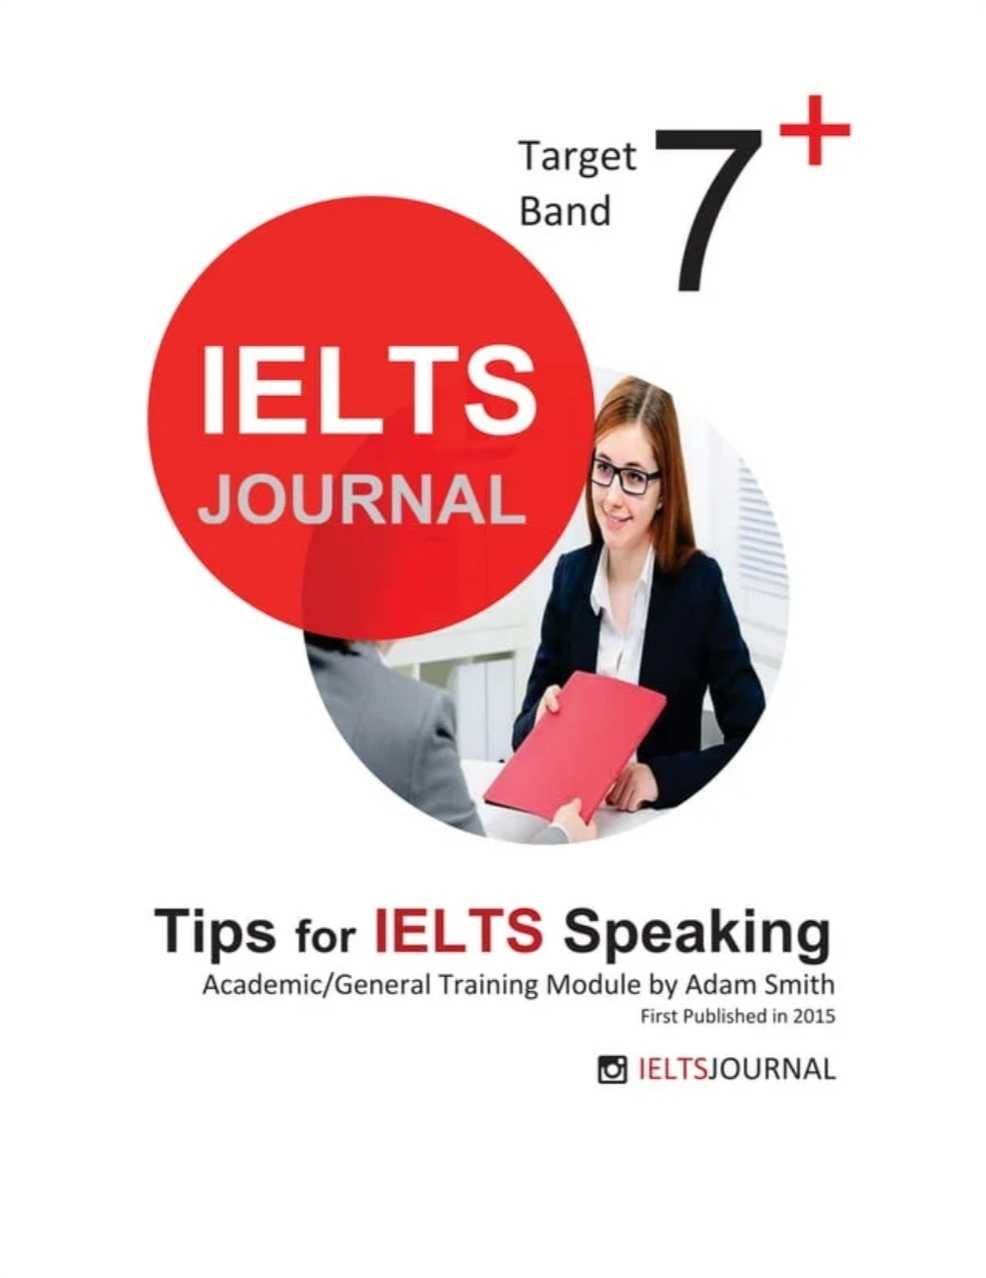 Ielts Journal Target band 7+ writing, reading, speaking